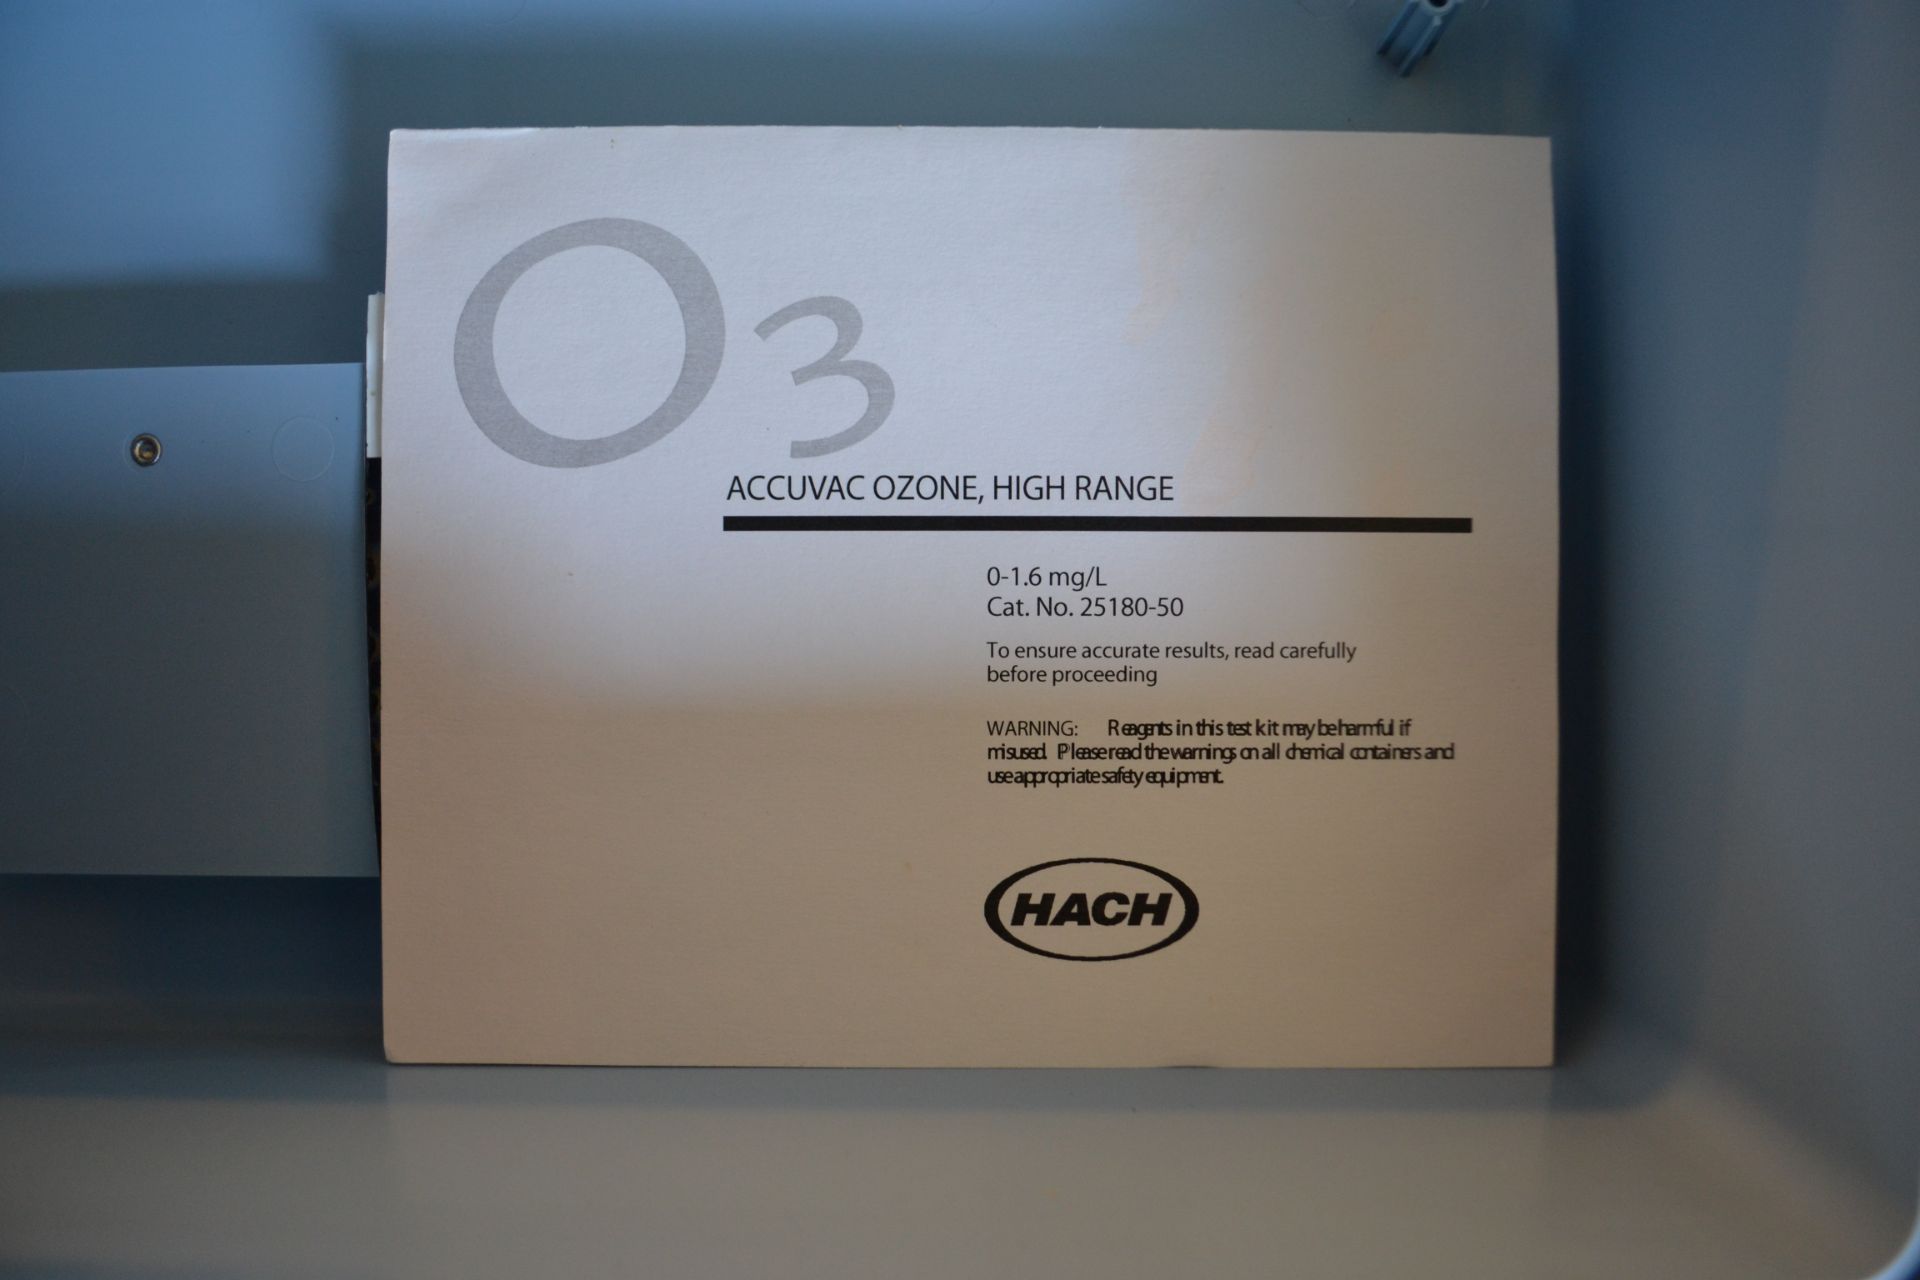 Hach Accuvac Ozone High Range test kit 0-1.6mg/L Cat. No. 25180-50 - Image 2 of 2